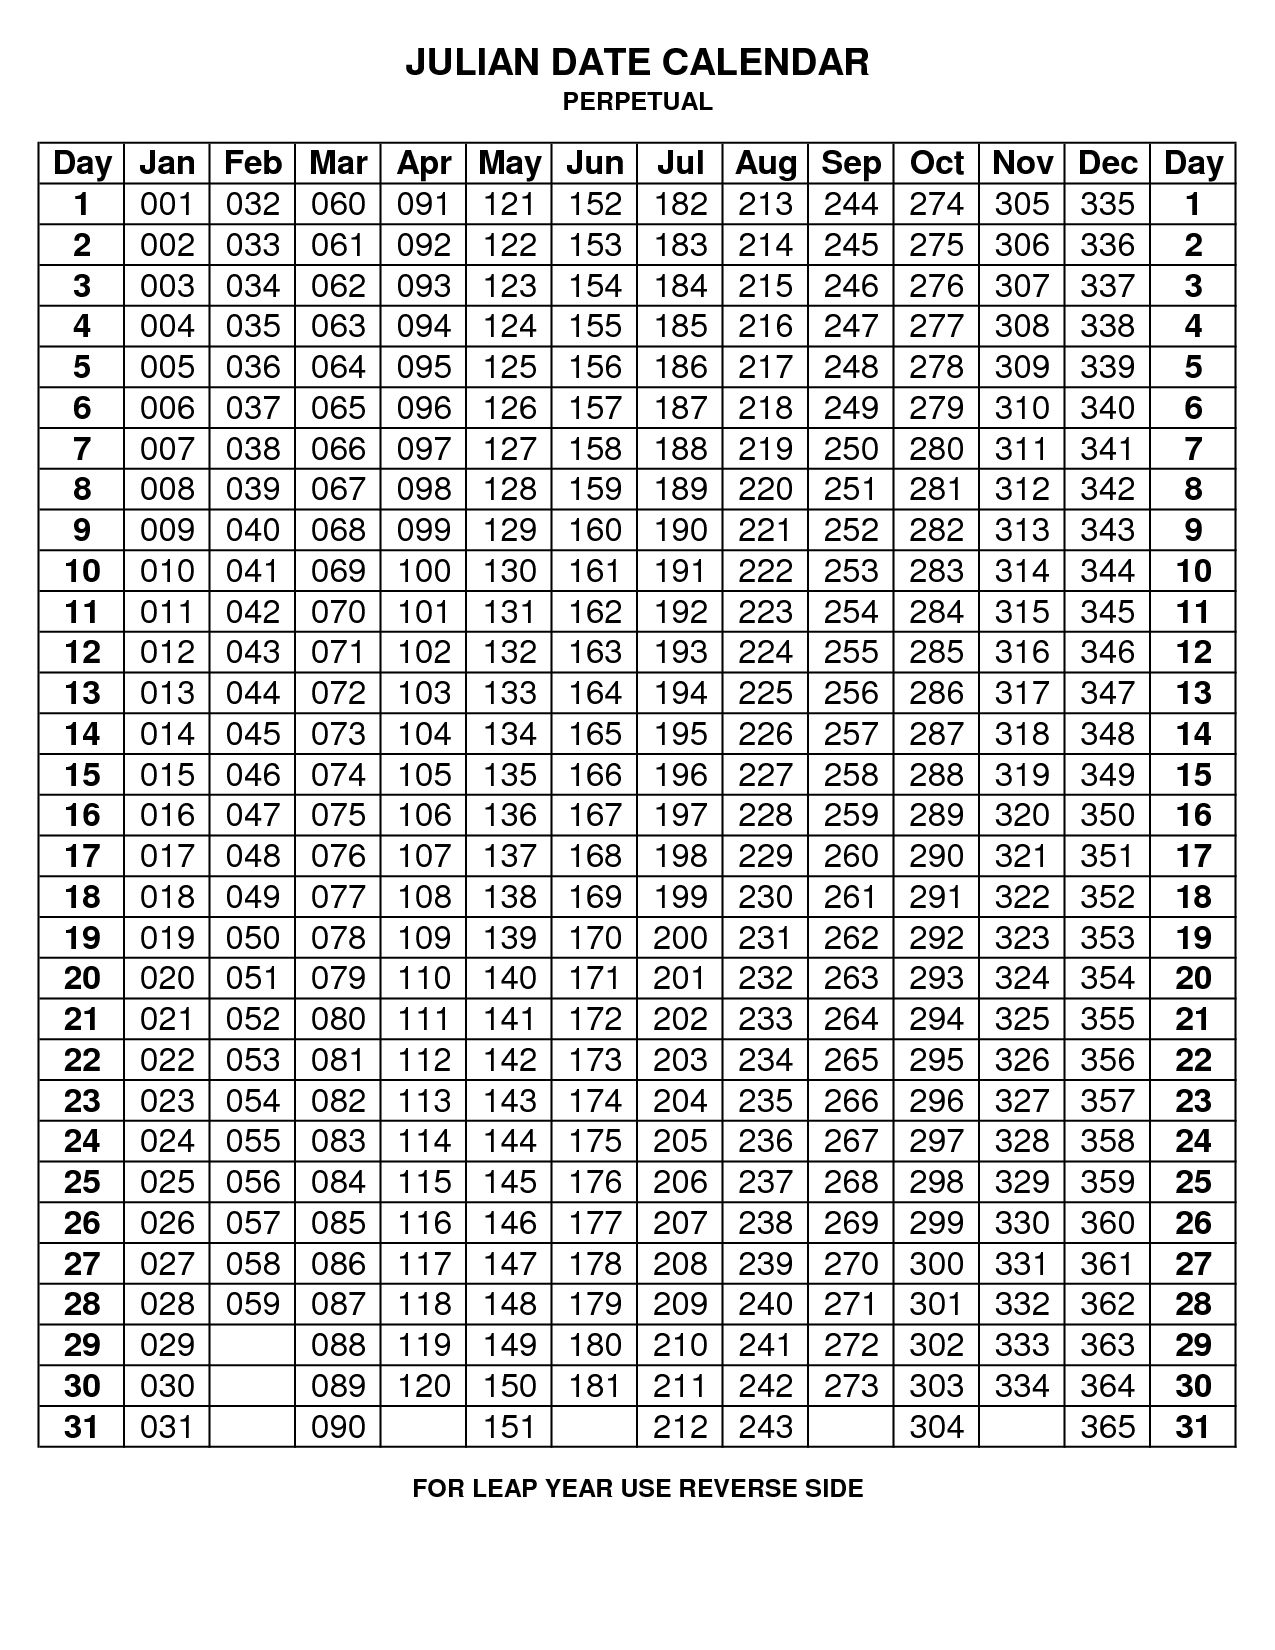 Julian Code - Non-Leap Year | Julian Dates, Printable throughout Calendar With No Leap Year